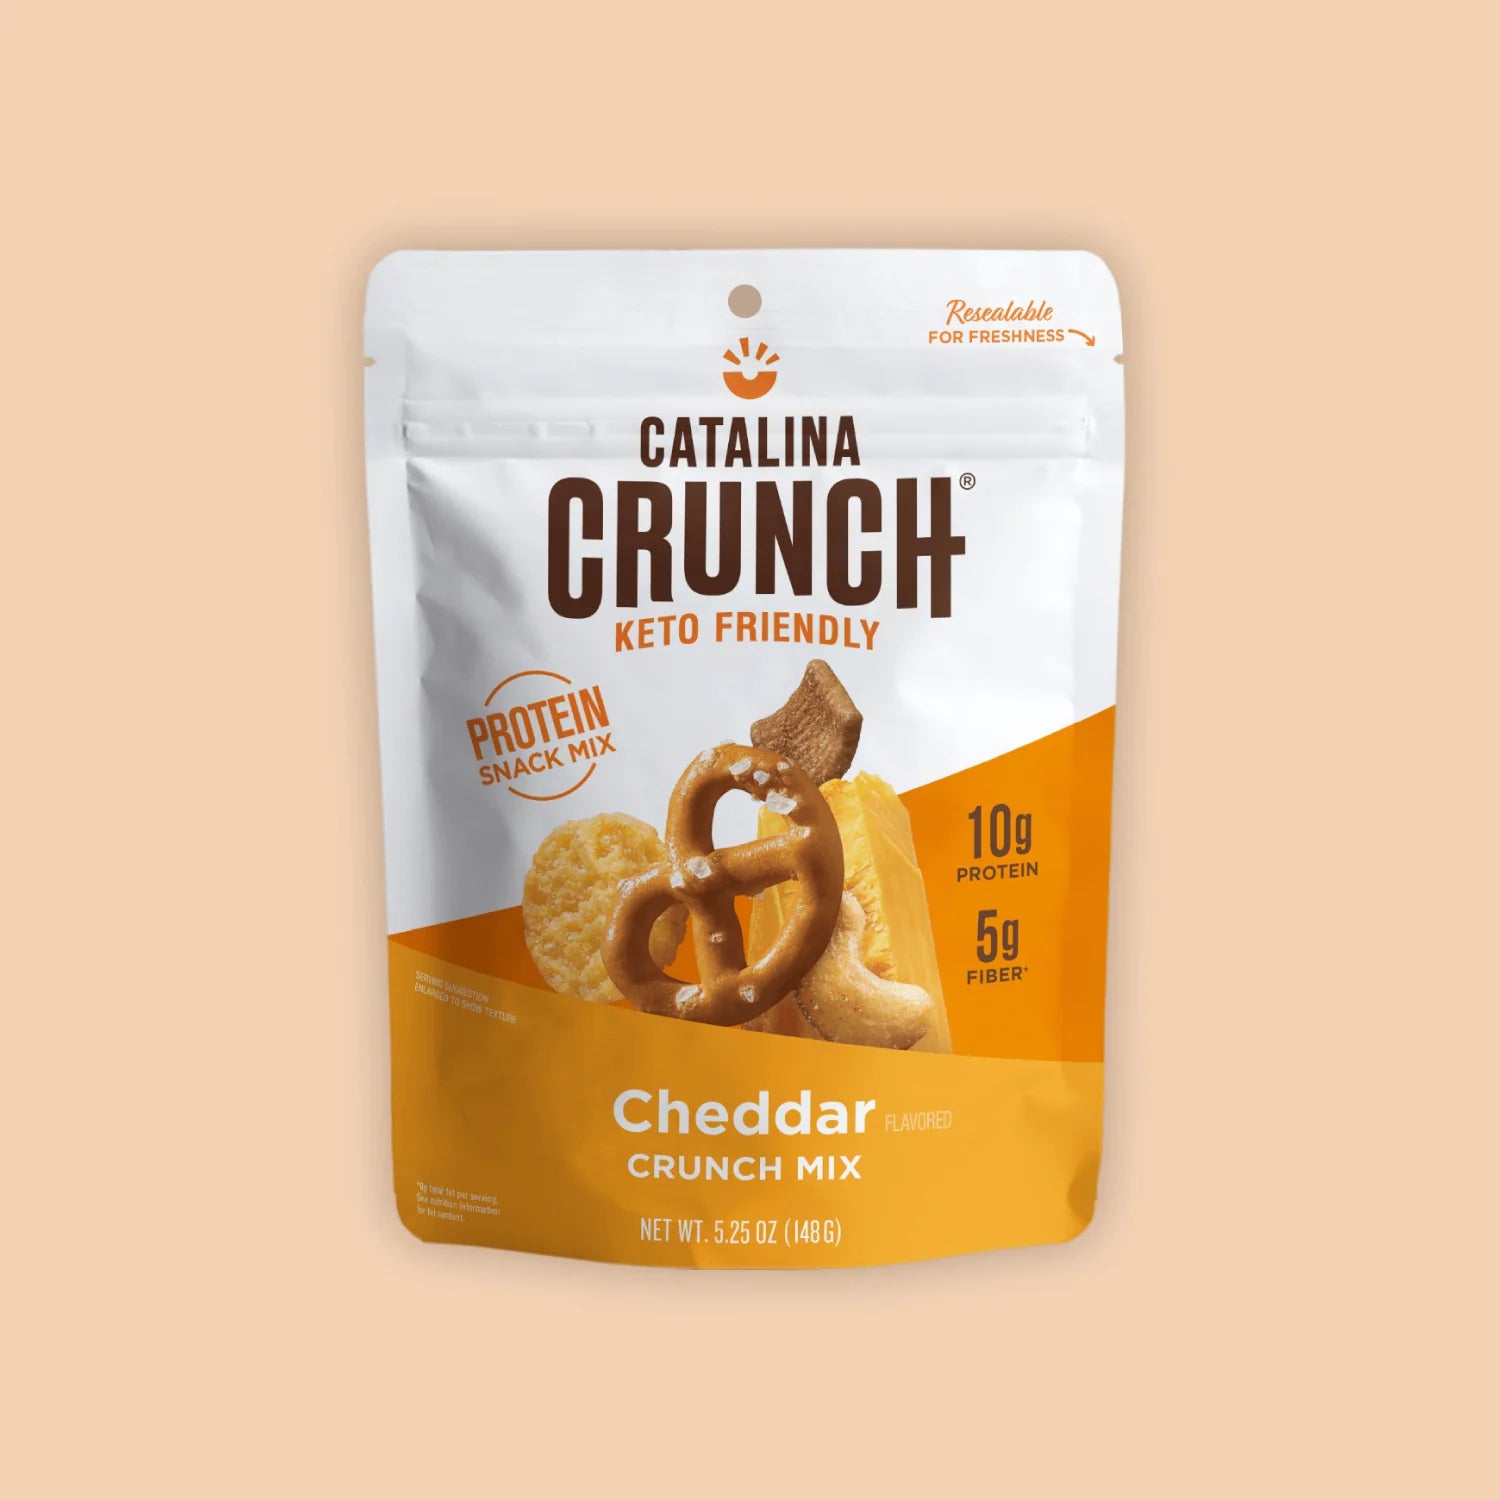 Catalina Crunch Snack Crunch Mix (1 bag) Cheddar Catalina Crunch